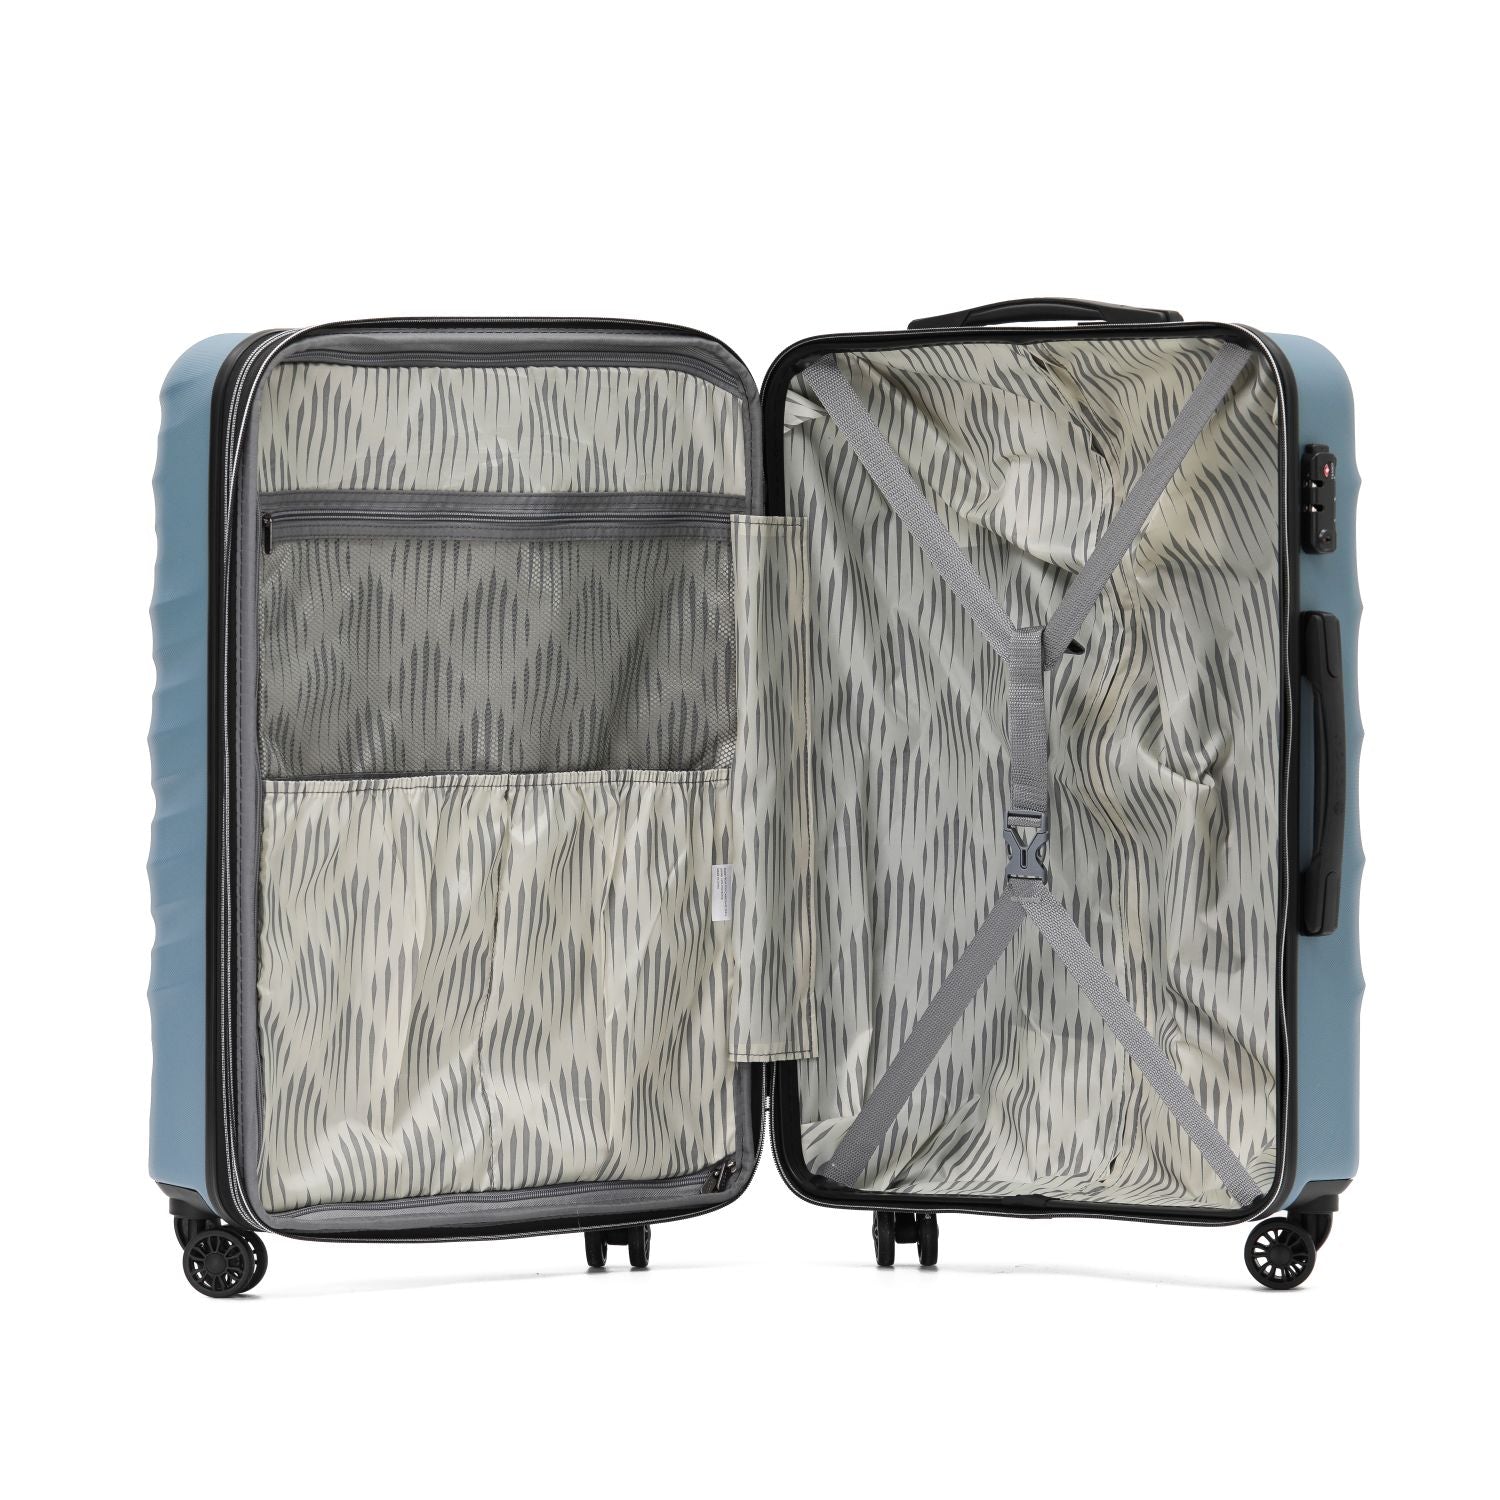 Tosca - Intersteller set of 3 suitcases - Blue-3